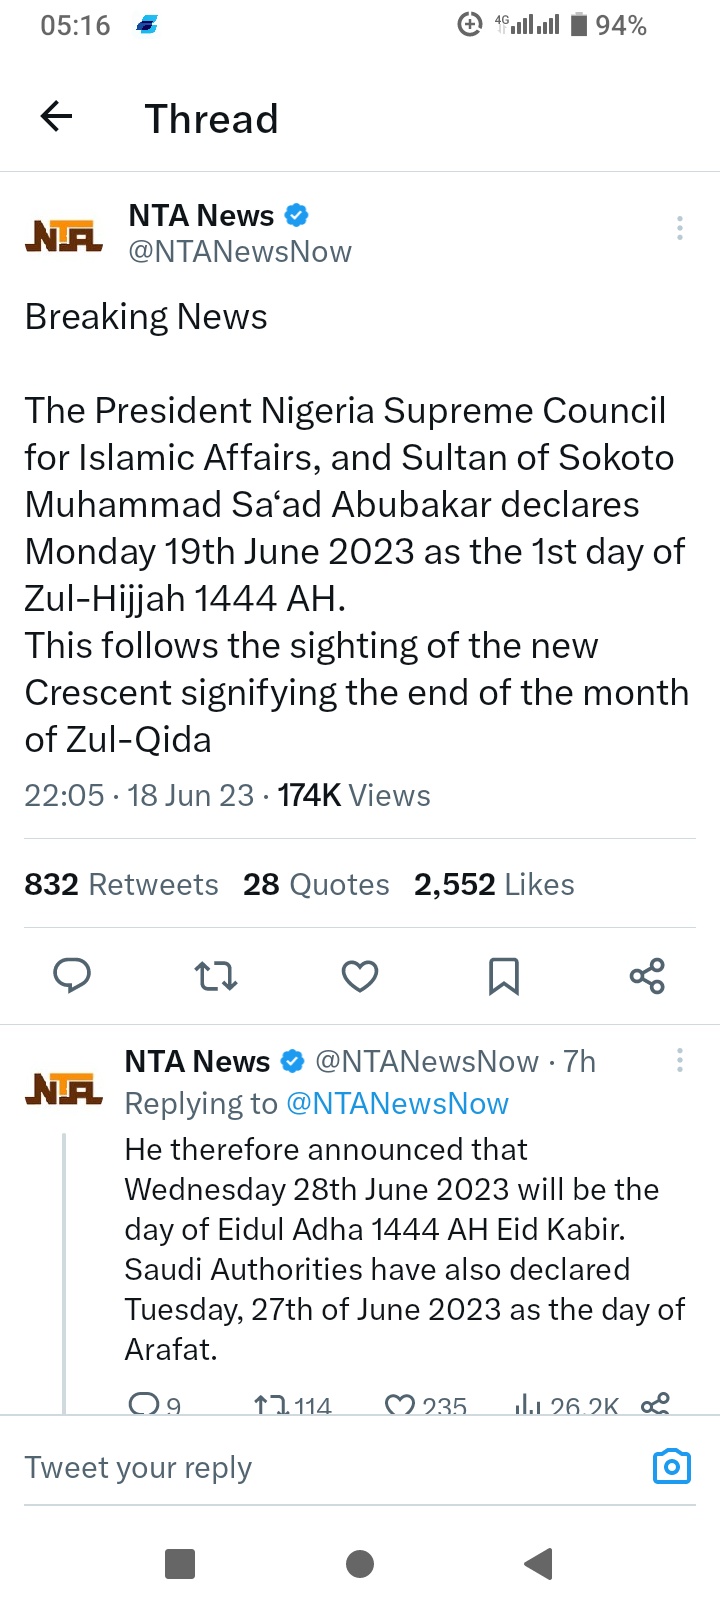 Sultan of Sokoto Muhammad Sa‘ad Abubakar declares Monday 19th June 2023 as the 1st day of Zul-Hijjah 1444 AH.